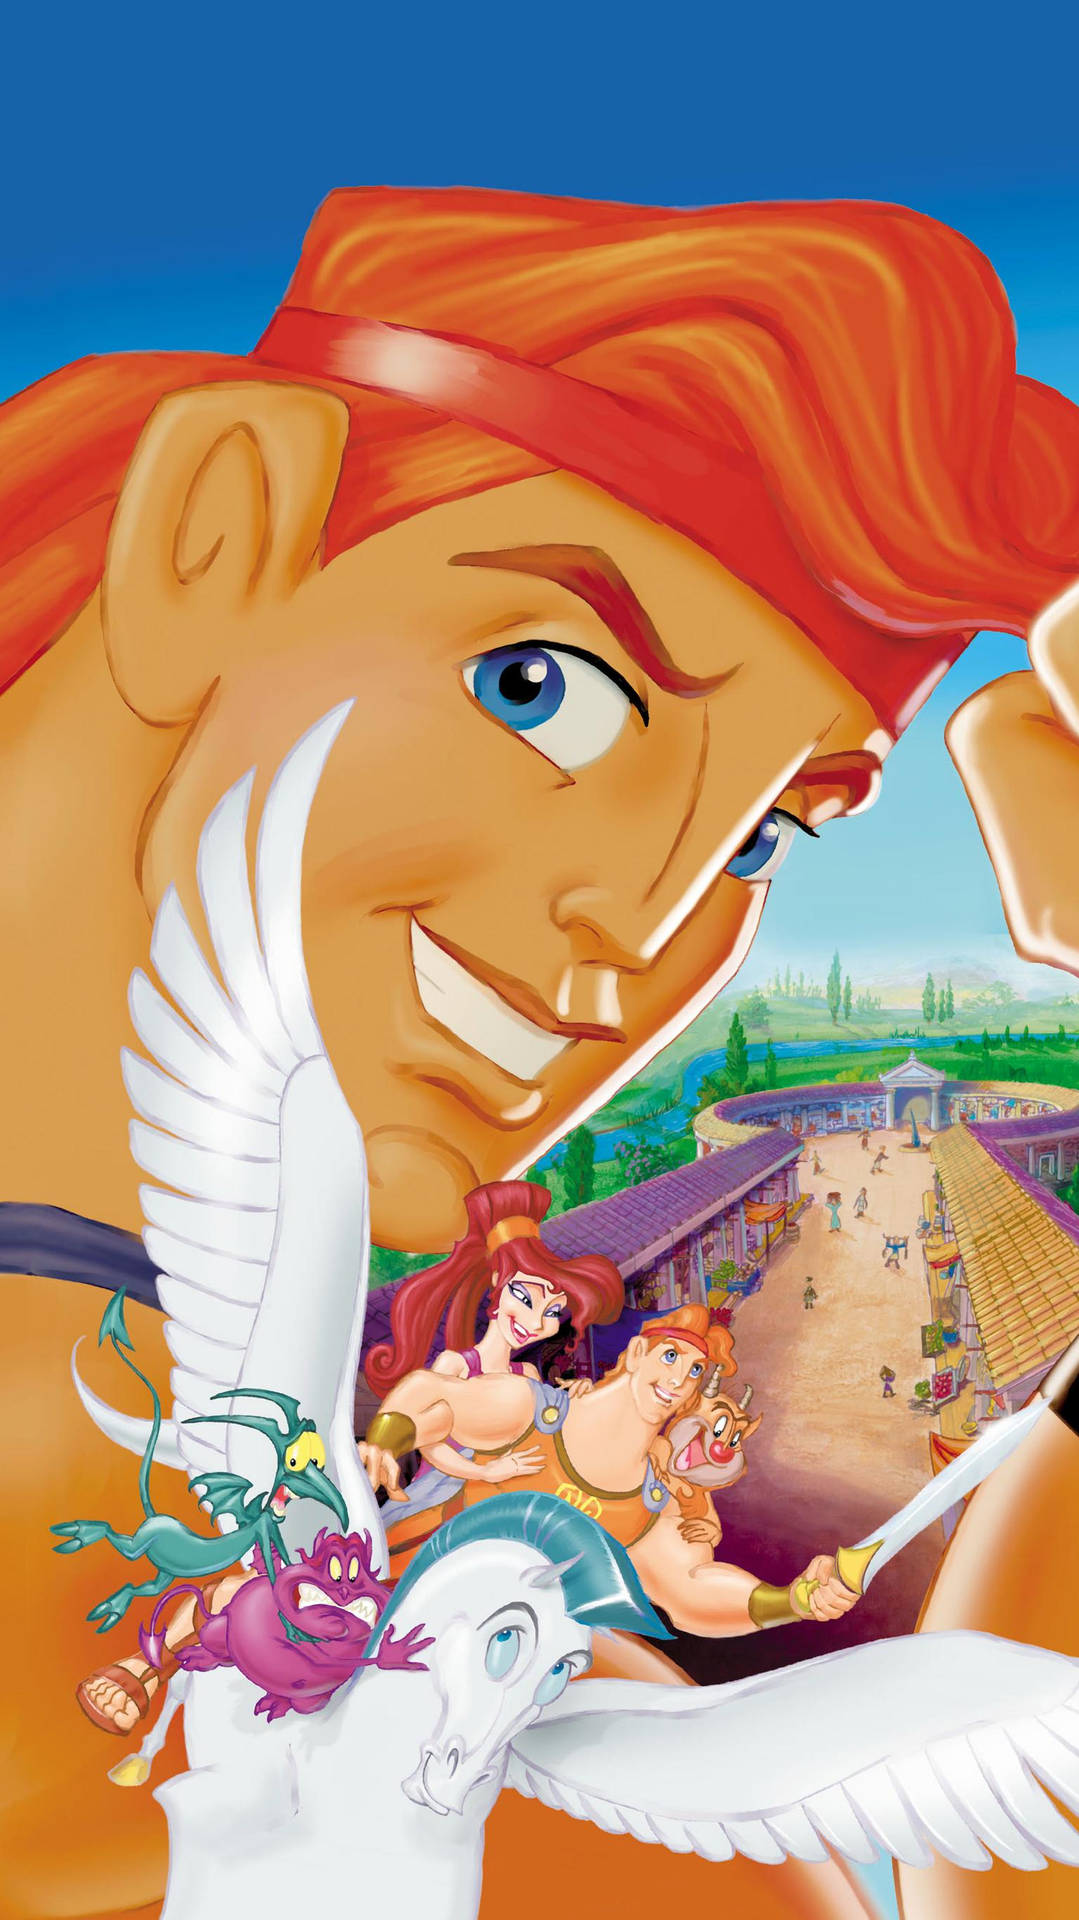 Disney Movie Hercules Poster Background